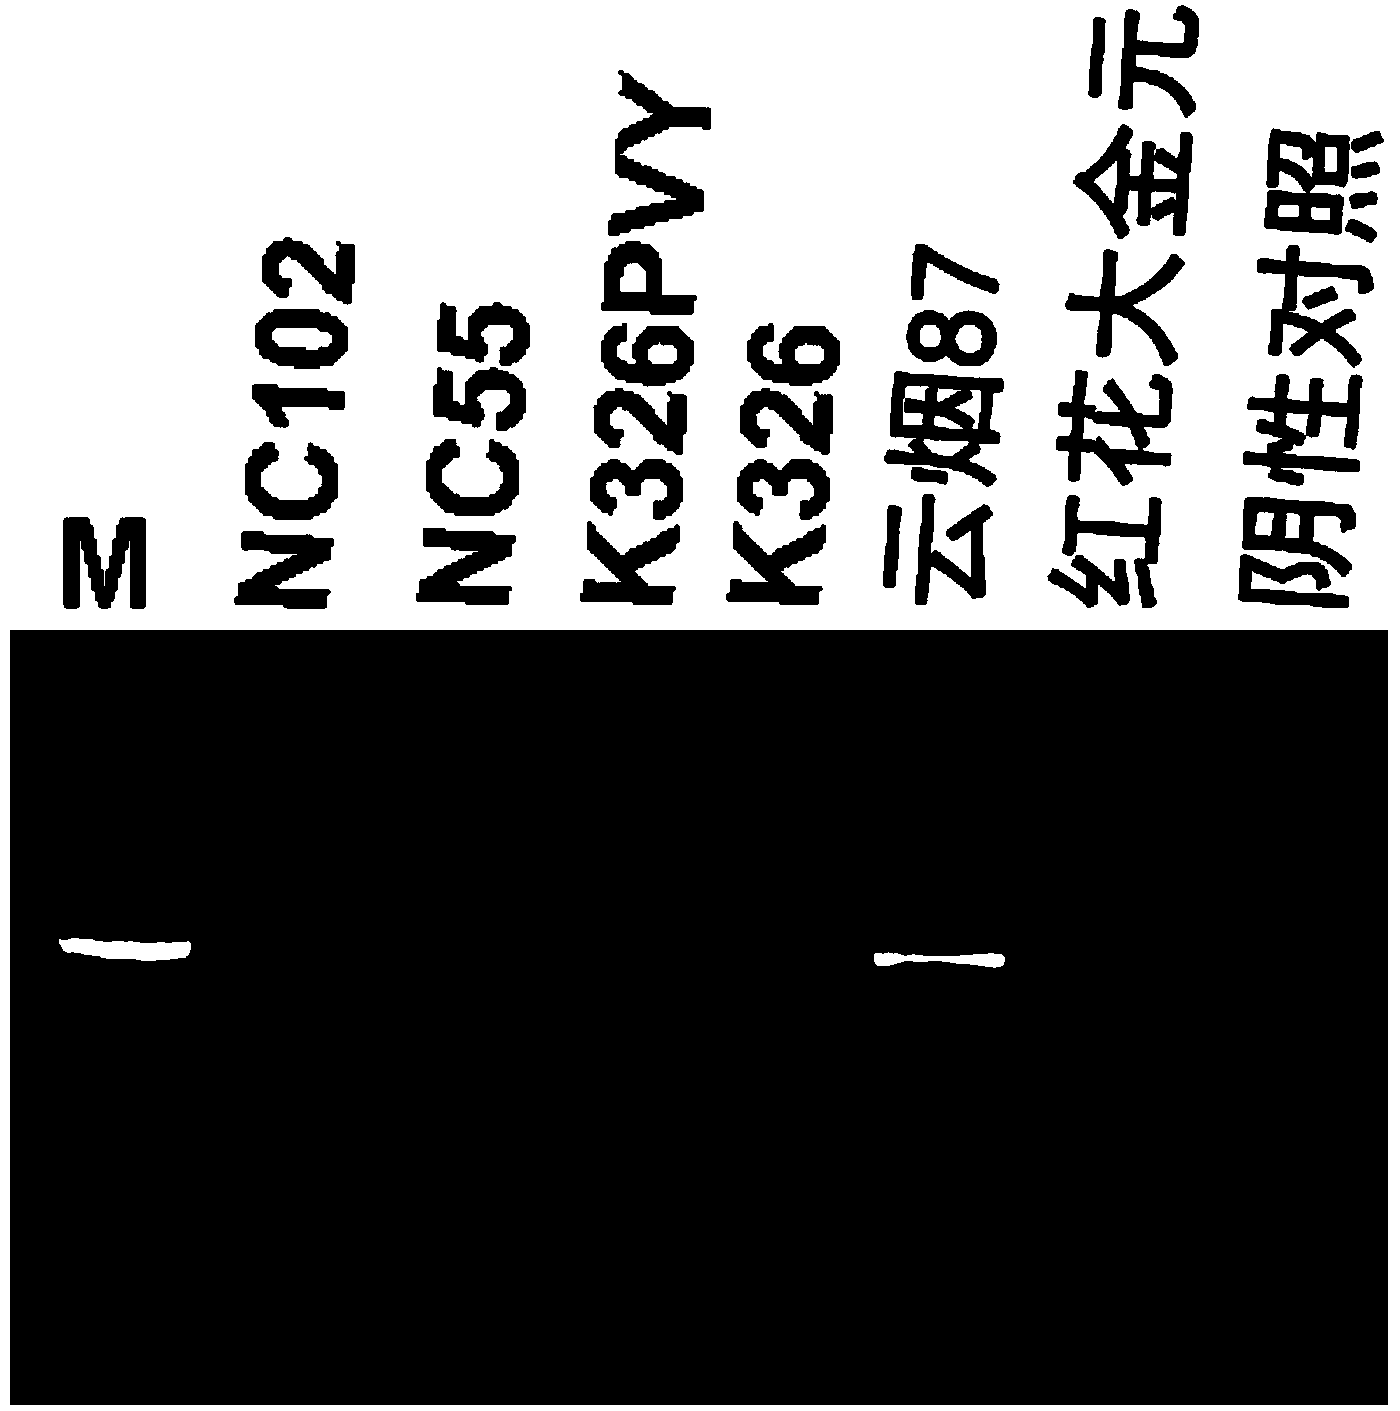 Molecular marker for identifying potato virus Y (PVY) resistance of tobacco